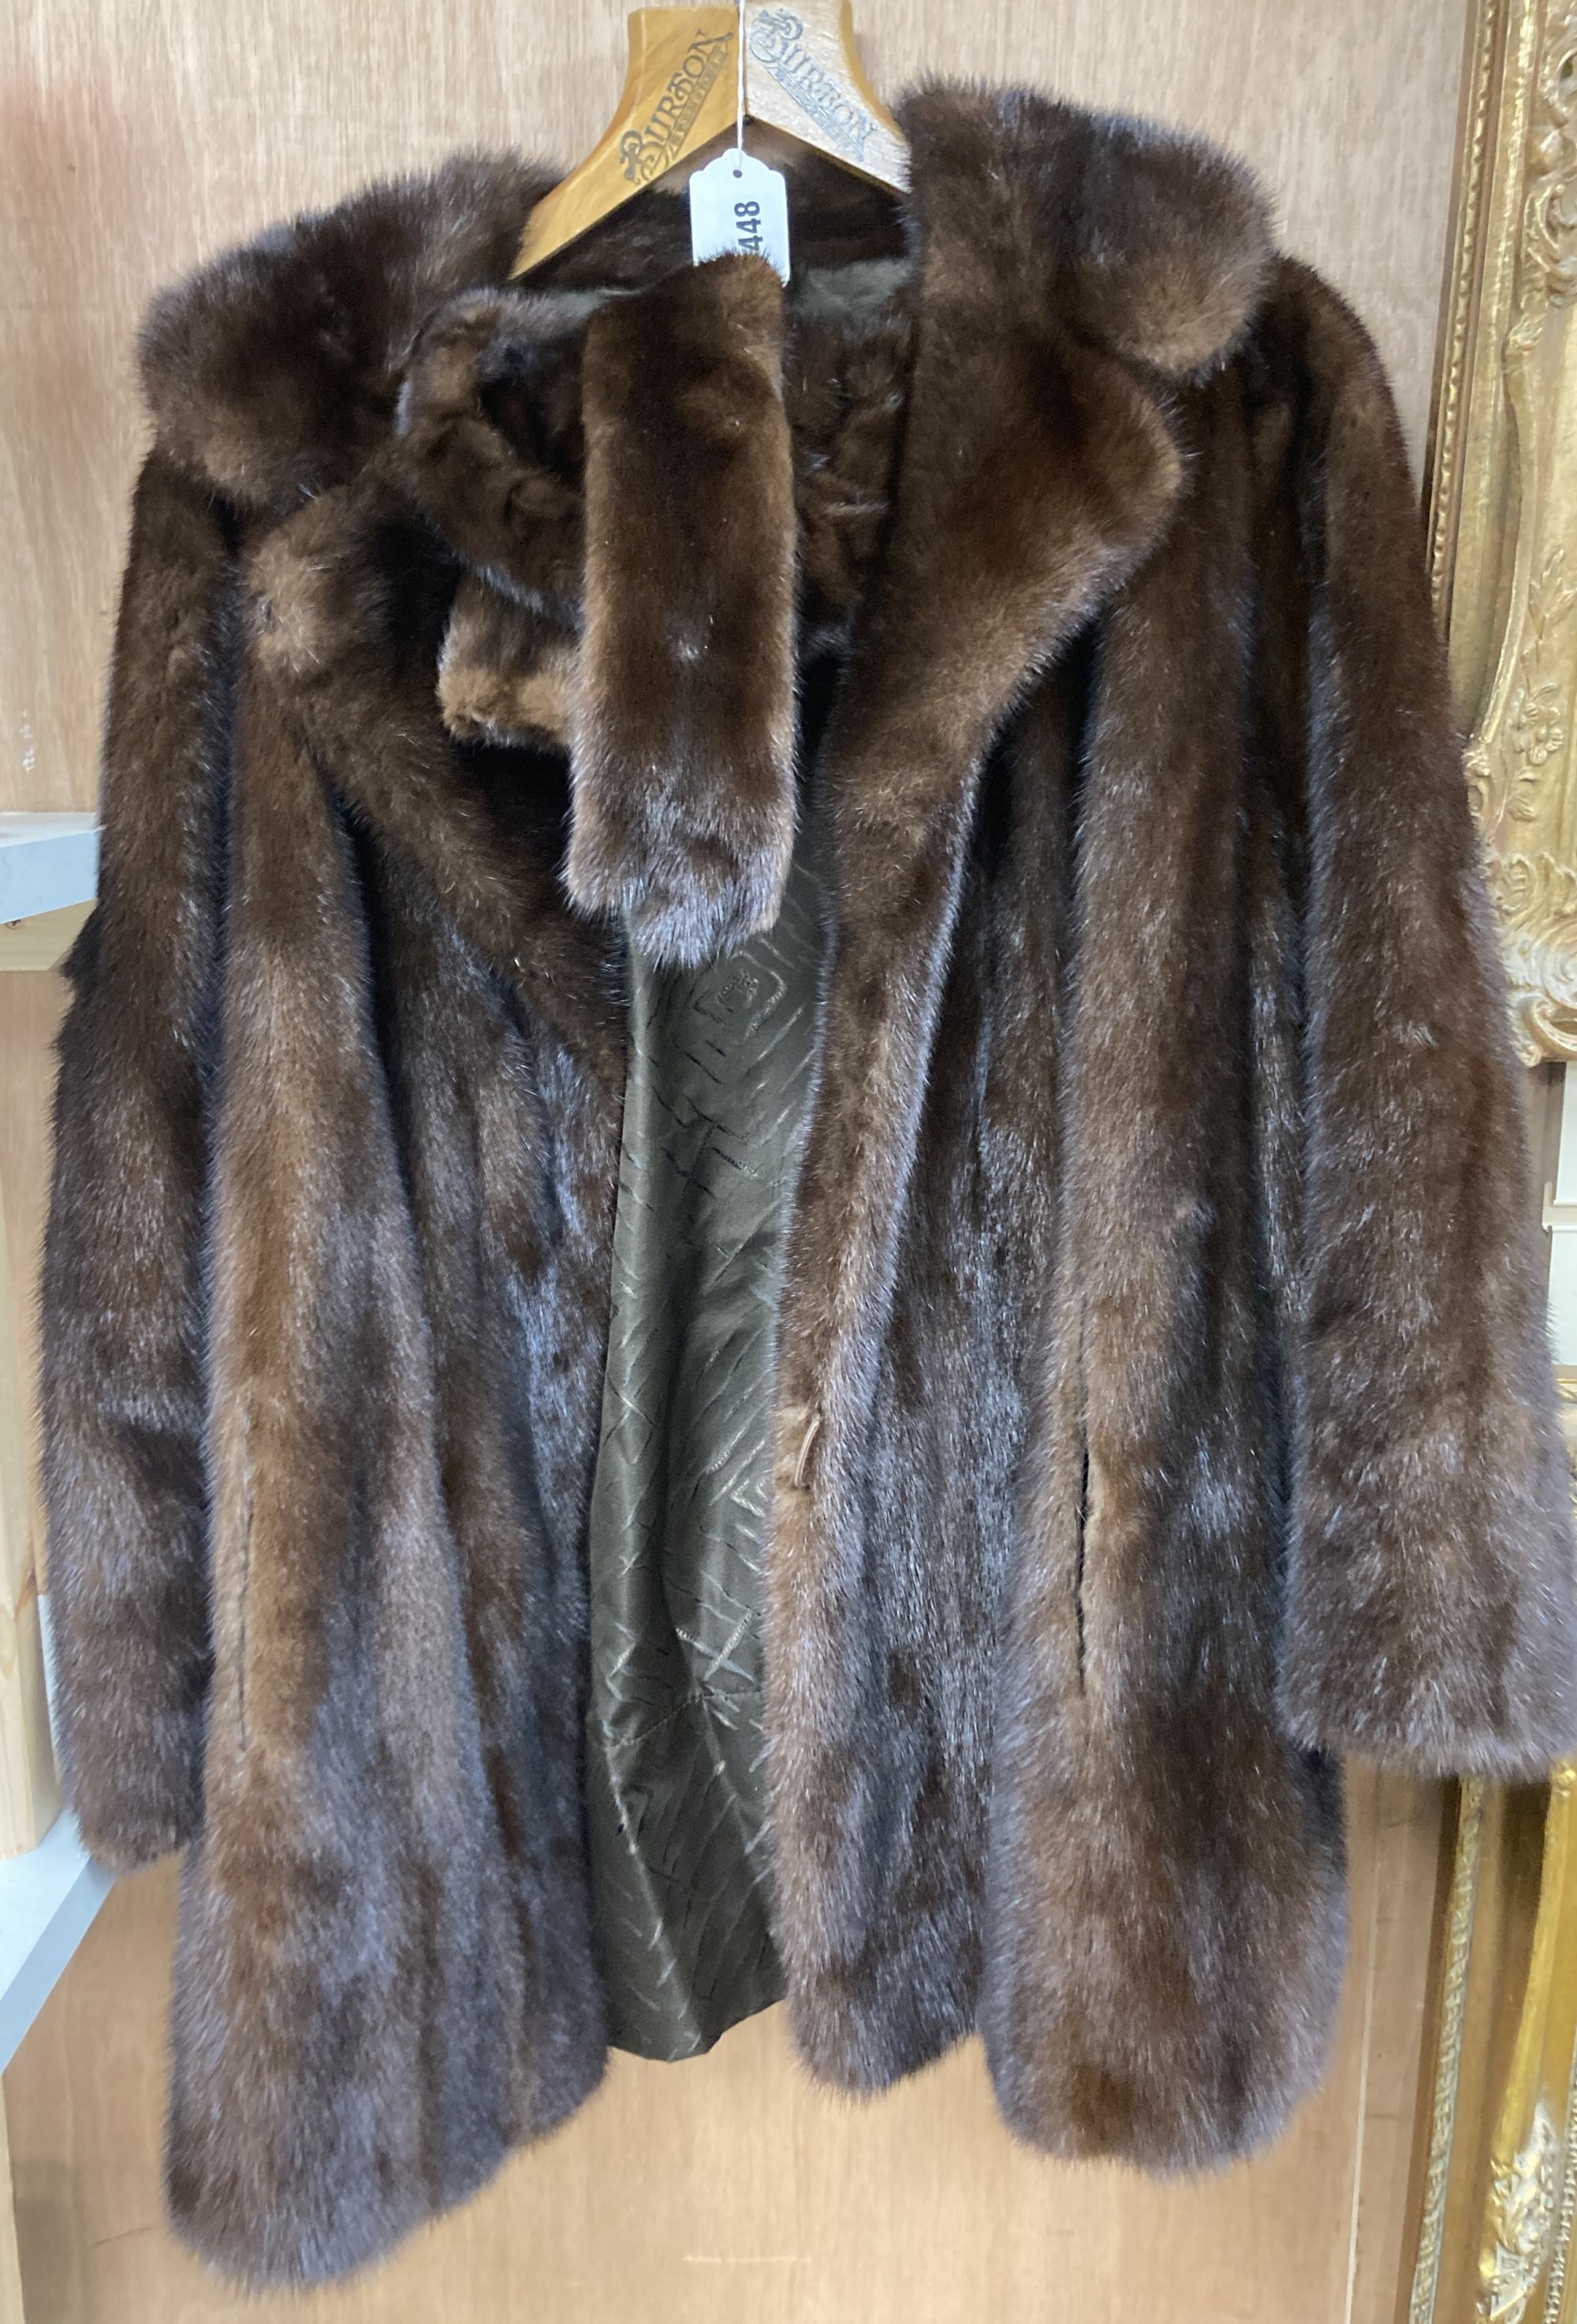 A brown mink fur coat, hat and ties